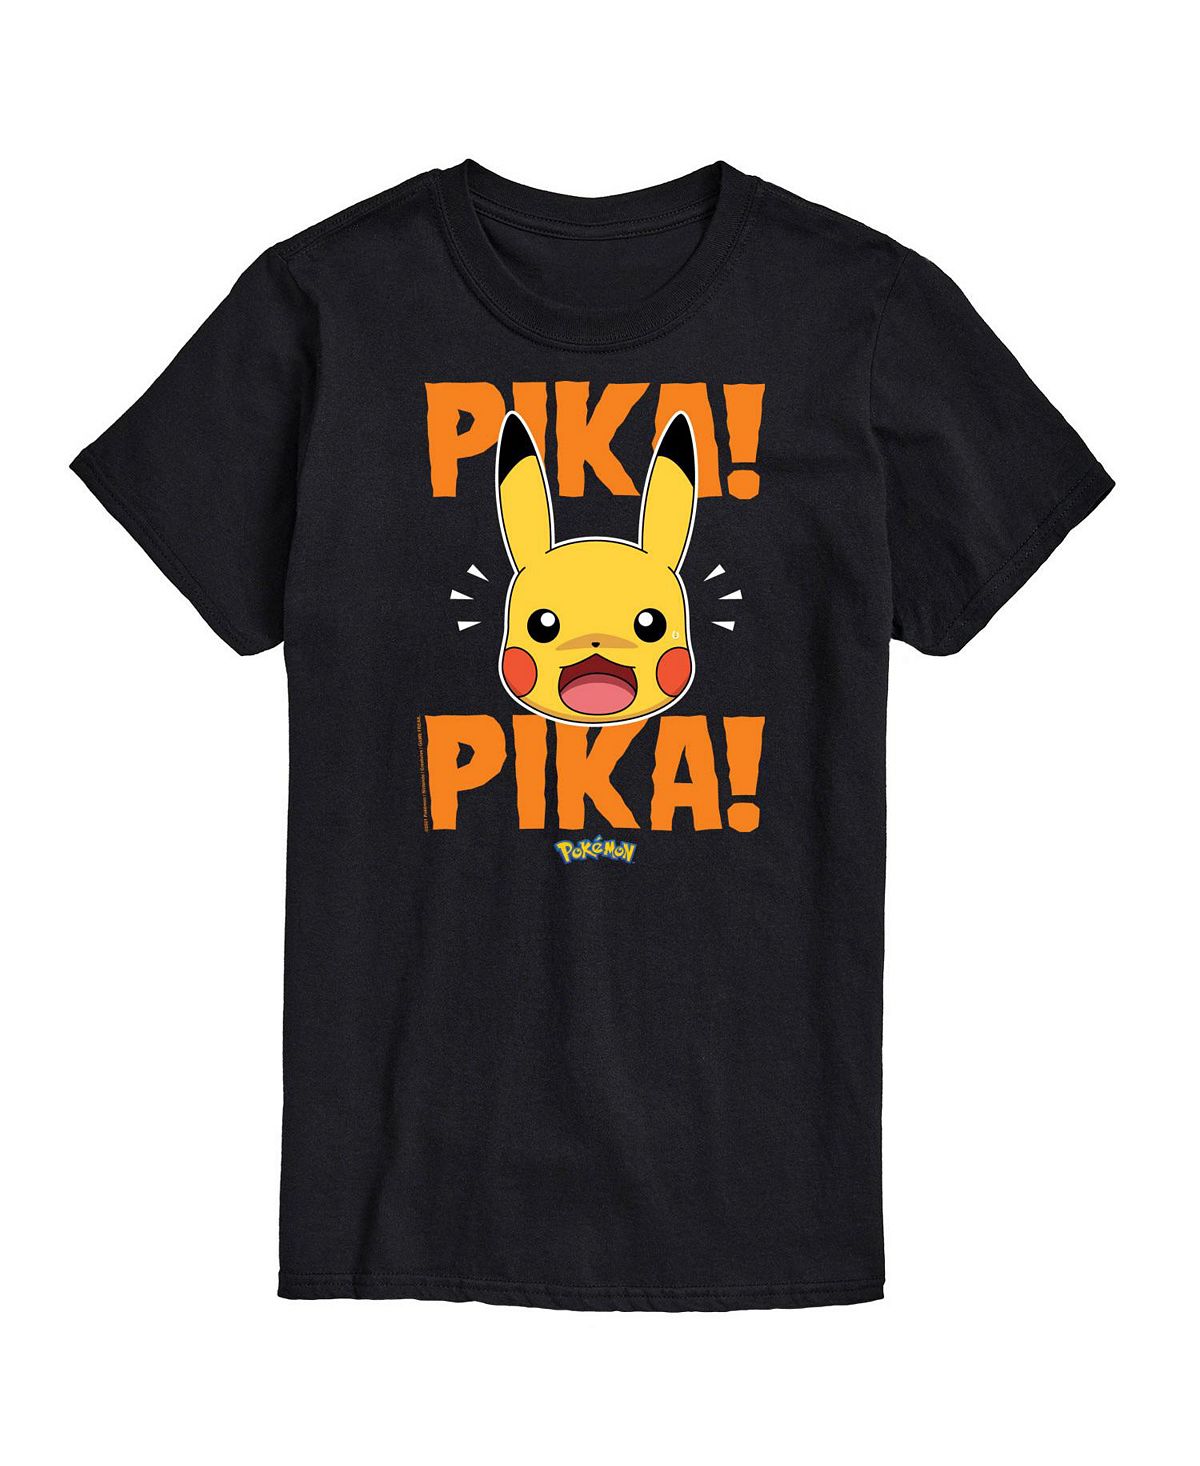 Мужская футболка с короткими рукавами pokemon pika pika AIRWAVES, черный набор pokemon футболка pika punk чёрная xl кружка для свч